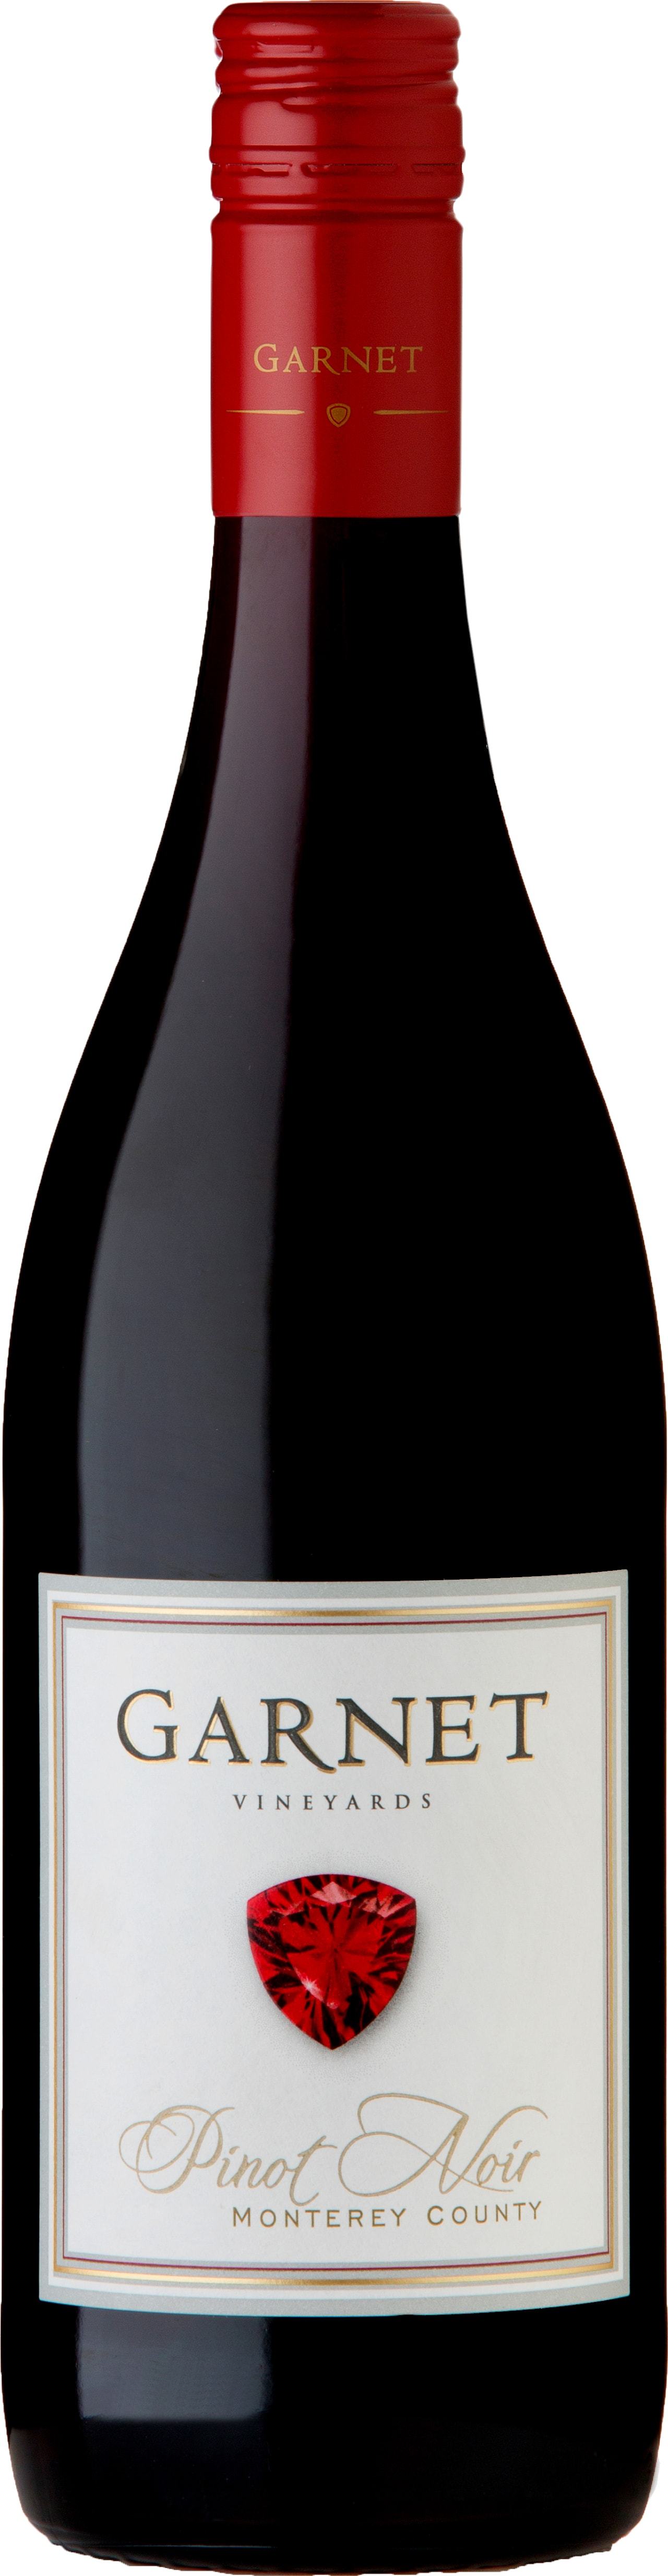 Garnet Vineyards Pinot Noir Monterey County 2017